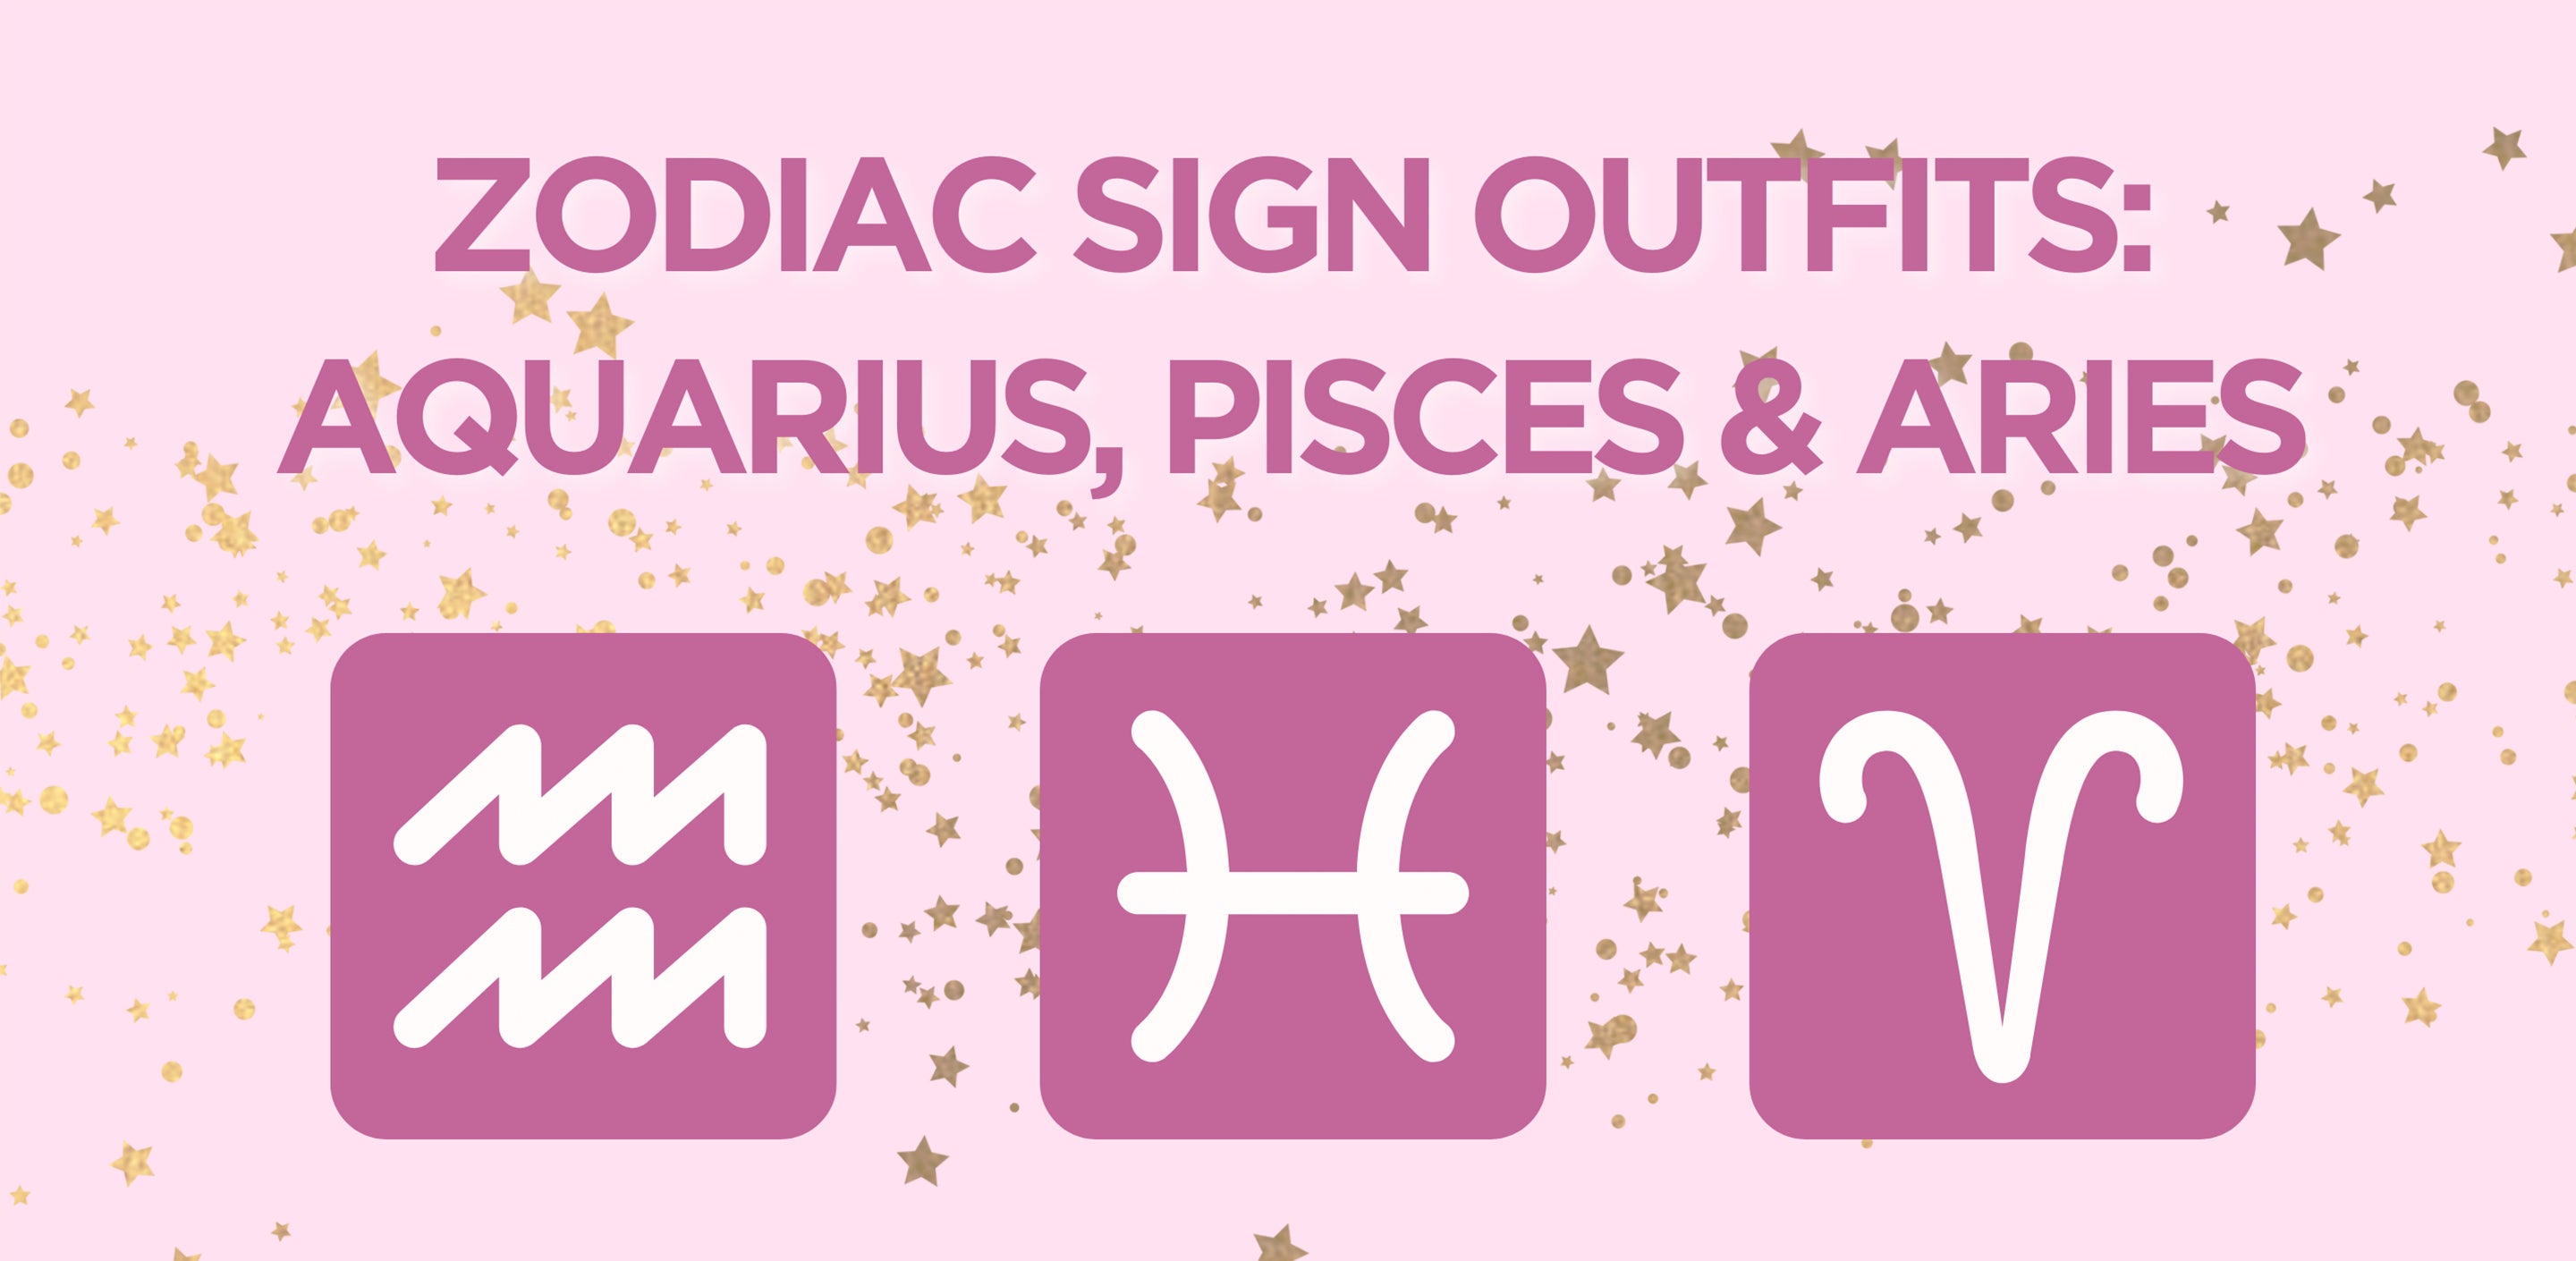 Zodiac Sign Outfit Inspo: Aquarius, Pisces & Aries | Astrology